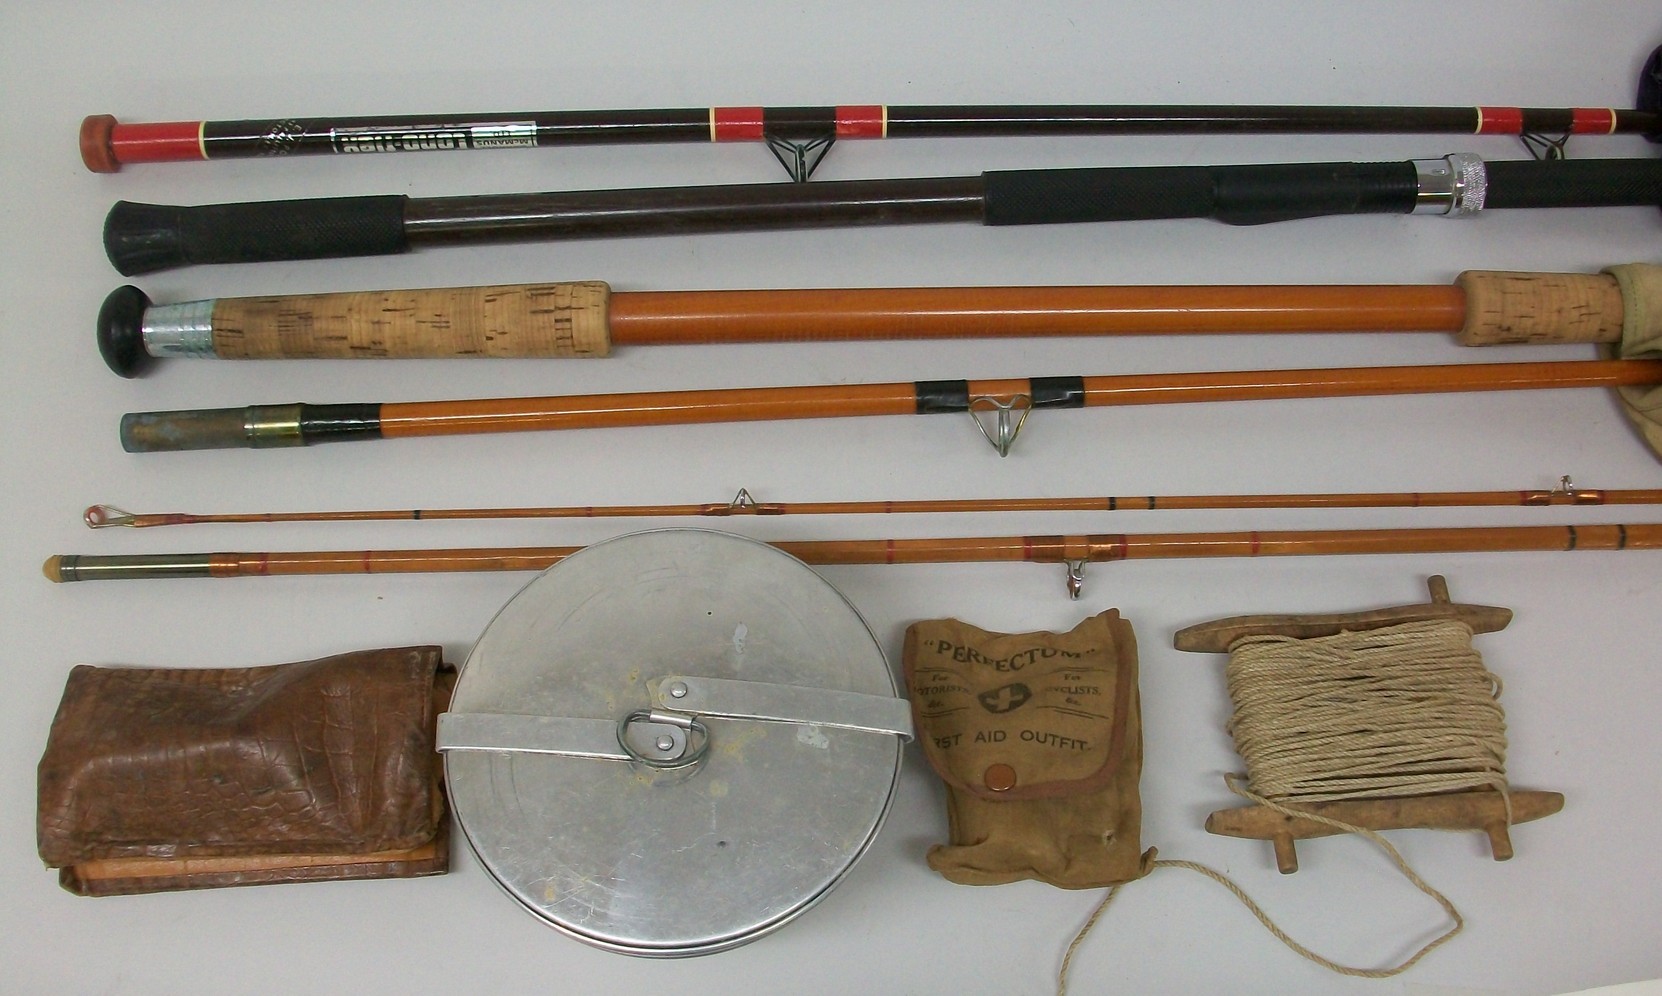 A Milwards Deuflex two piece fishing rod, Carroll McManus cono-flex rod, further rods, Shakespeare